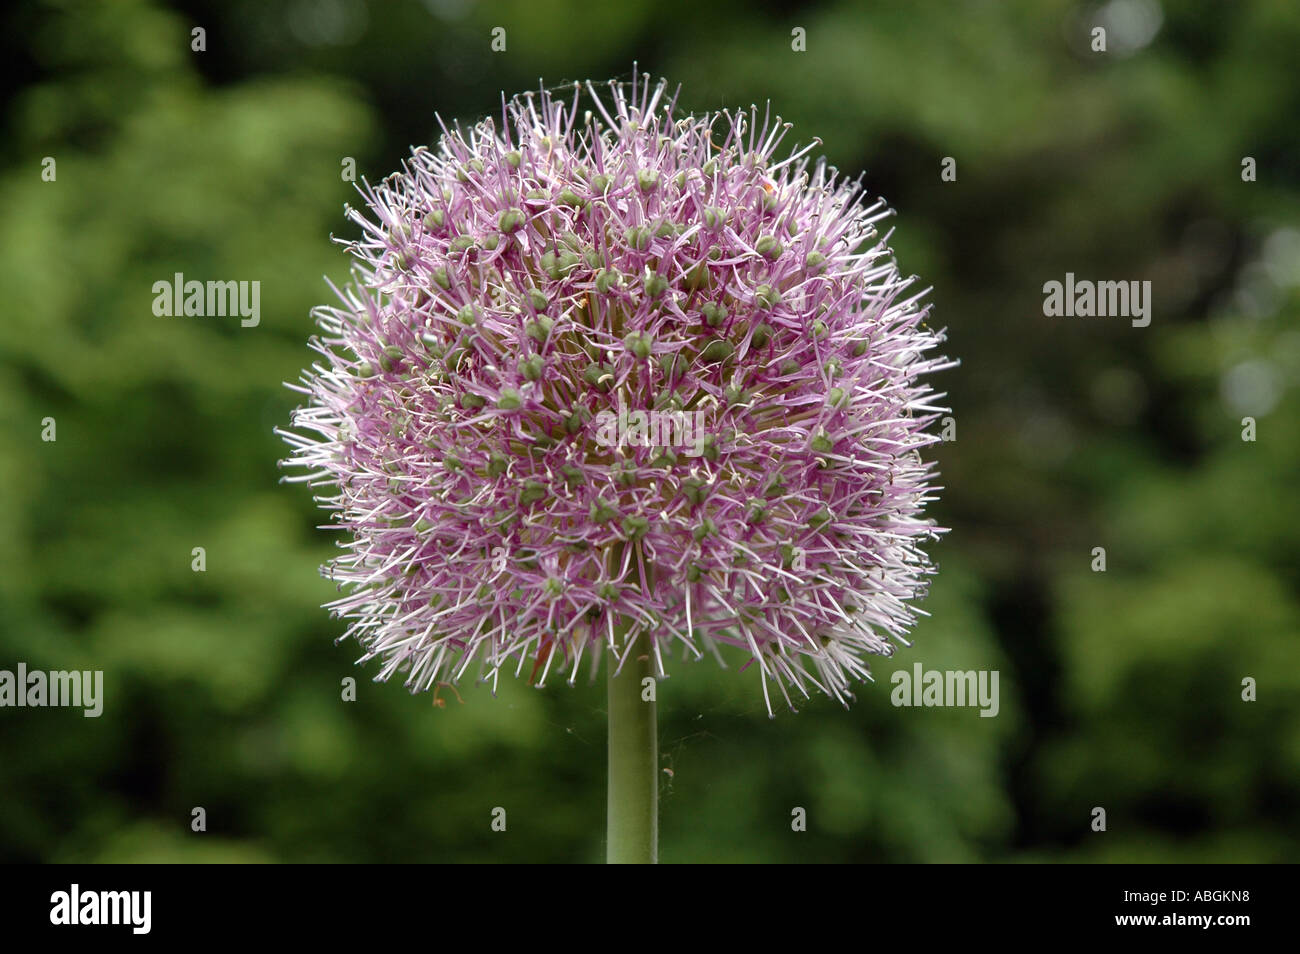 Ornamental Onion Allium stipitatum blooming Stock Photo